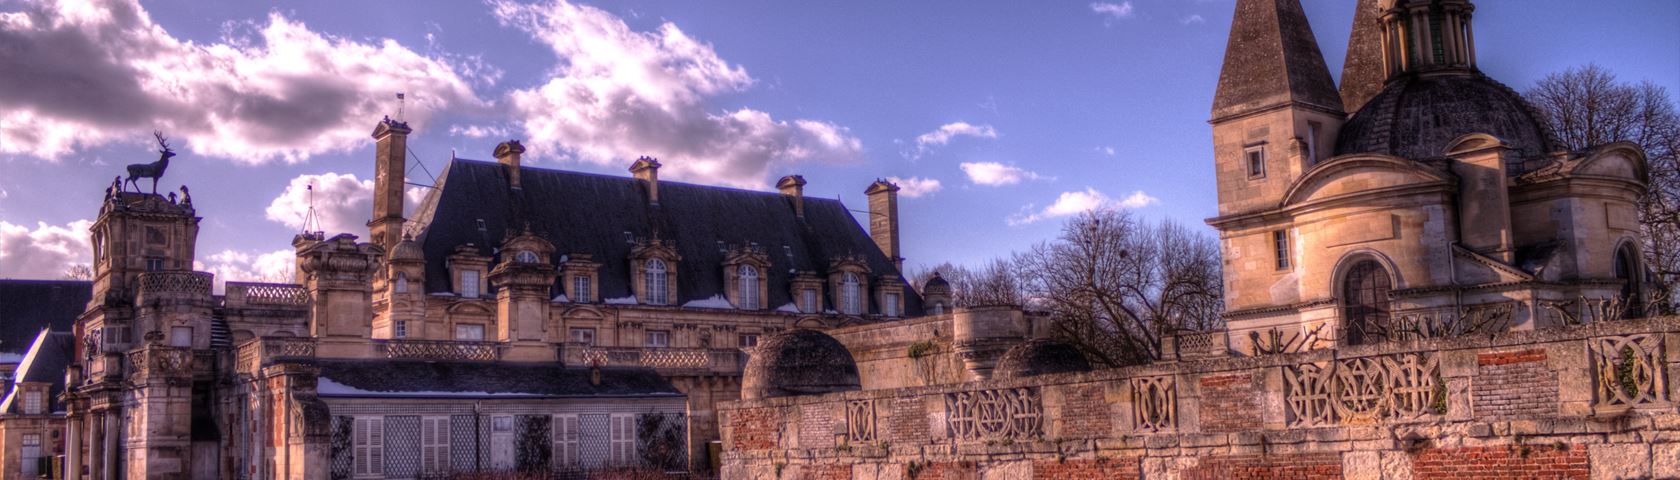 Chateau d'Anet